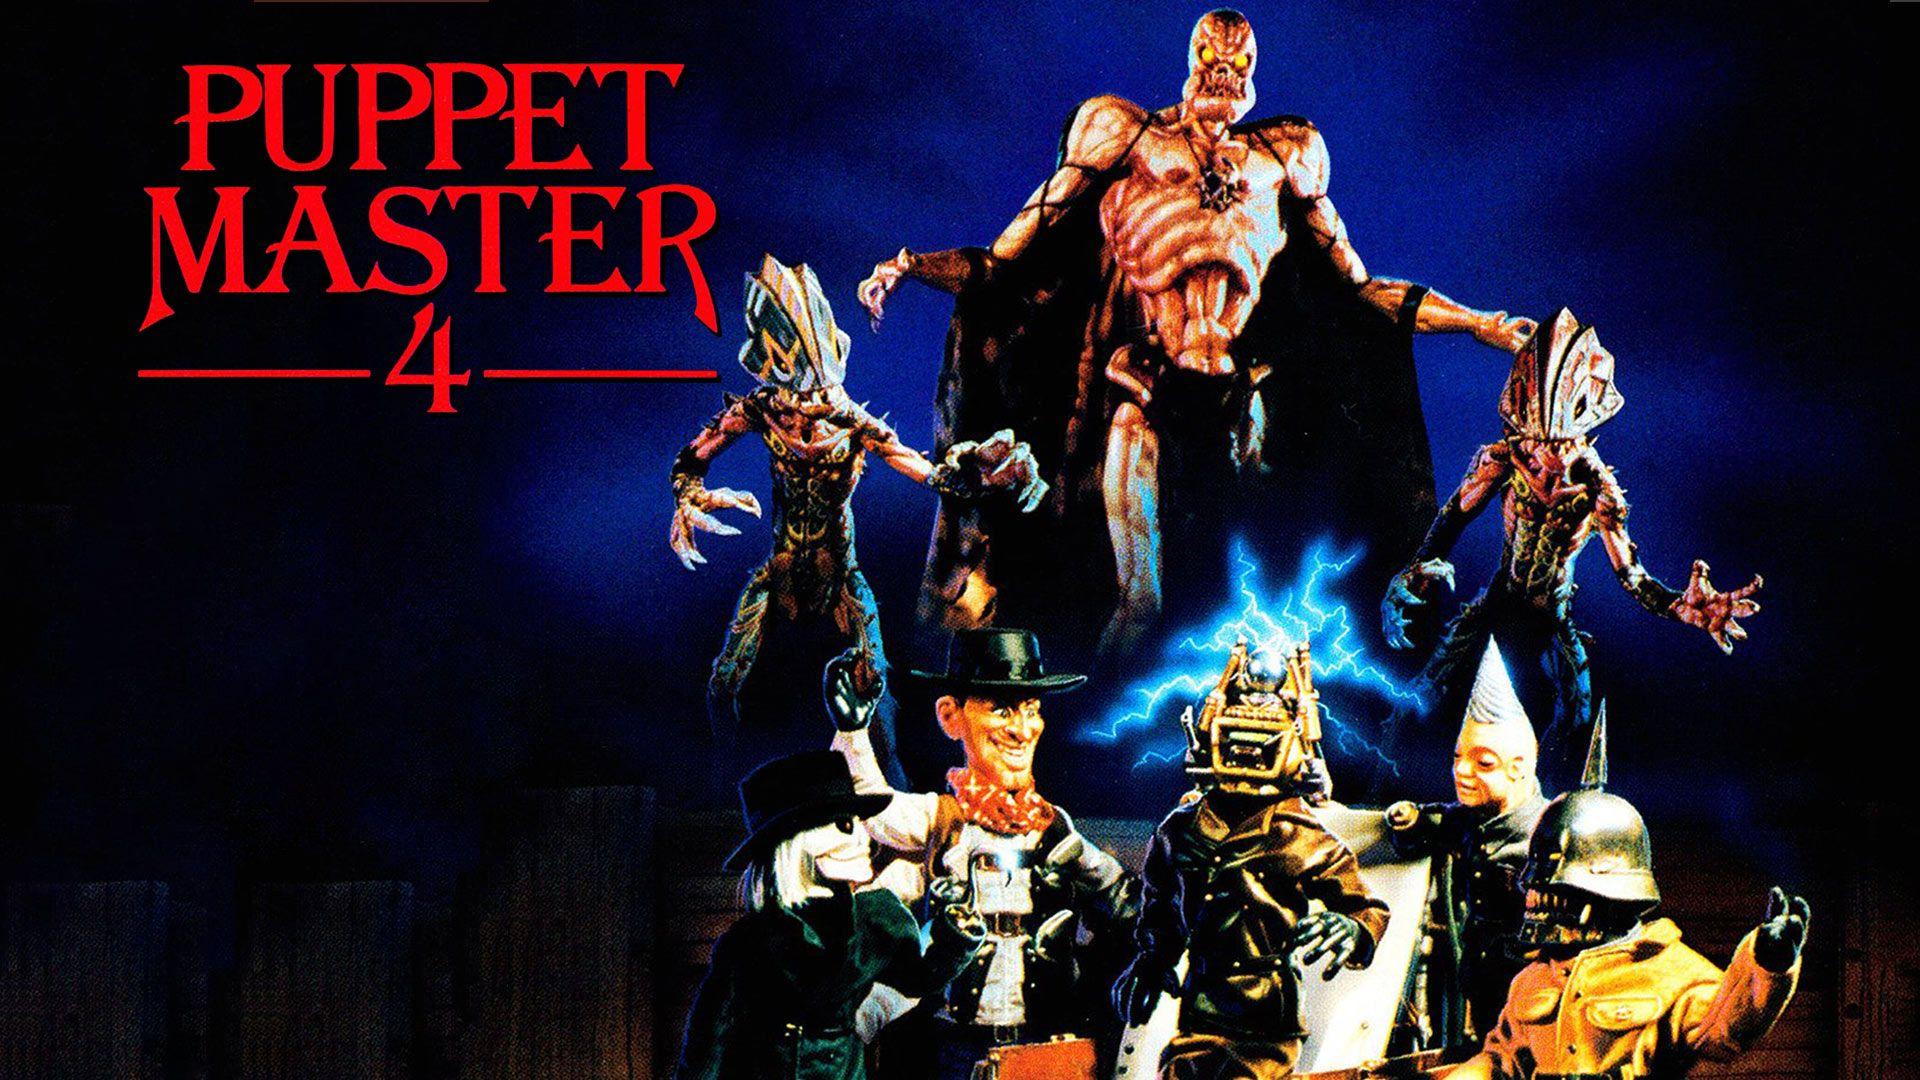 Puppet Master 4. Puppet Master 1993. Повелитель кукол блейд. Повелитель кукол 4. Puppetmaster adventures